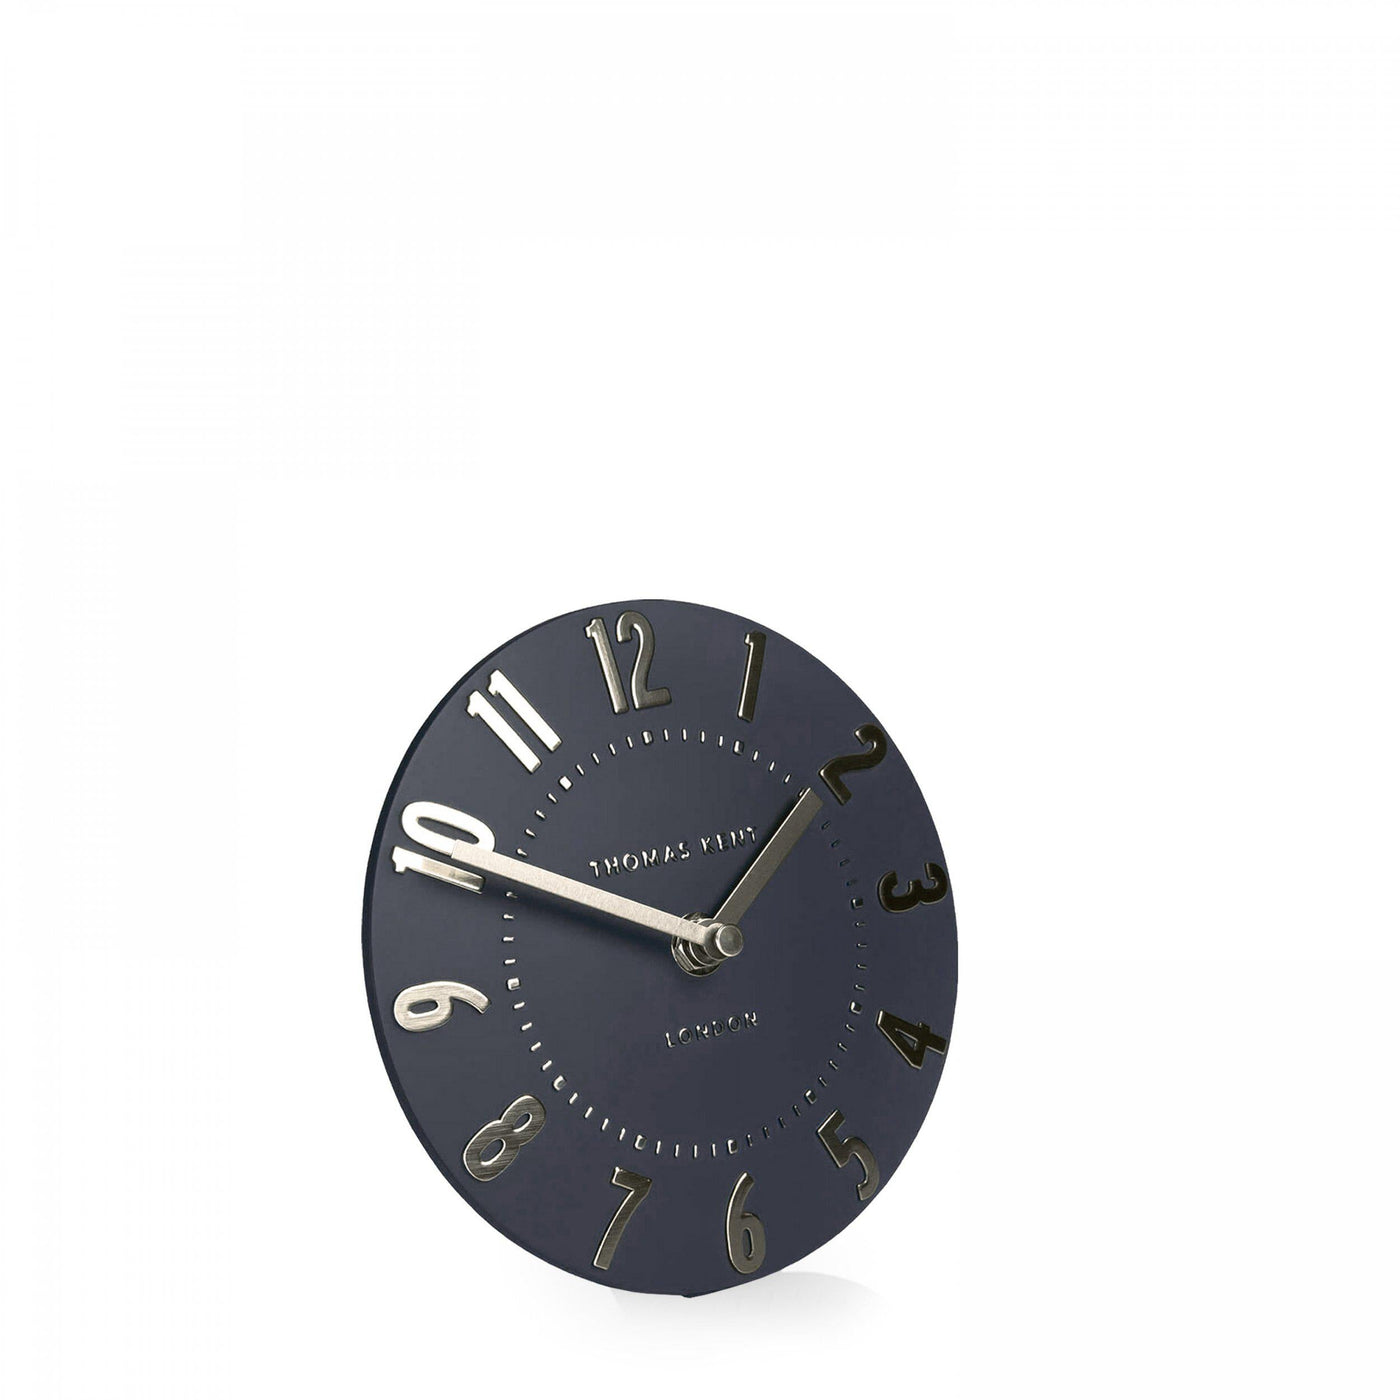 Thomas Kent London. Mulberry Mantel Clock 6" (15cm) Odyssey - timeframedclocks